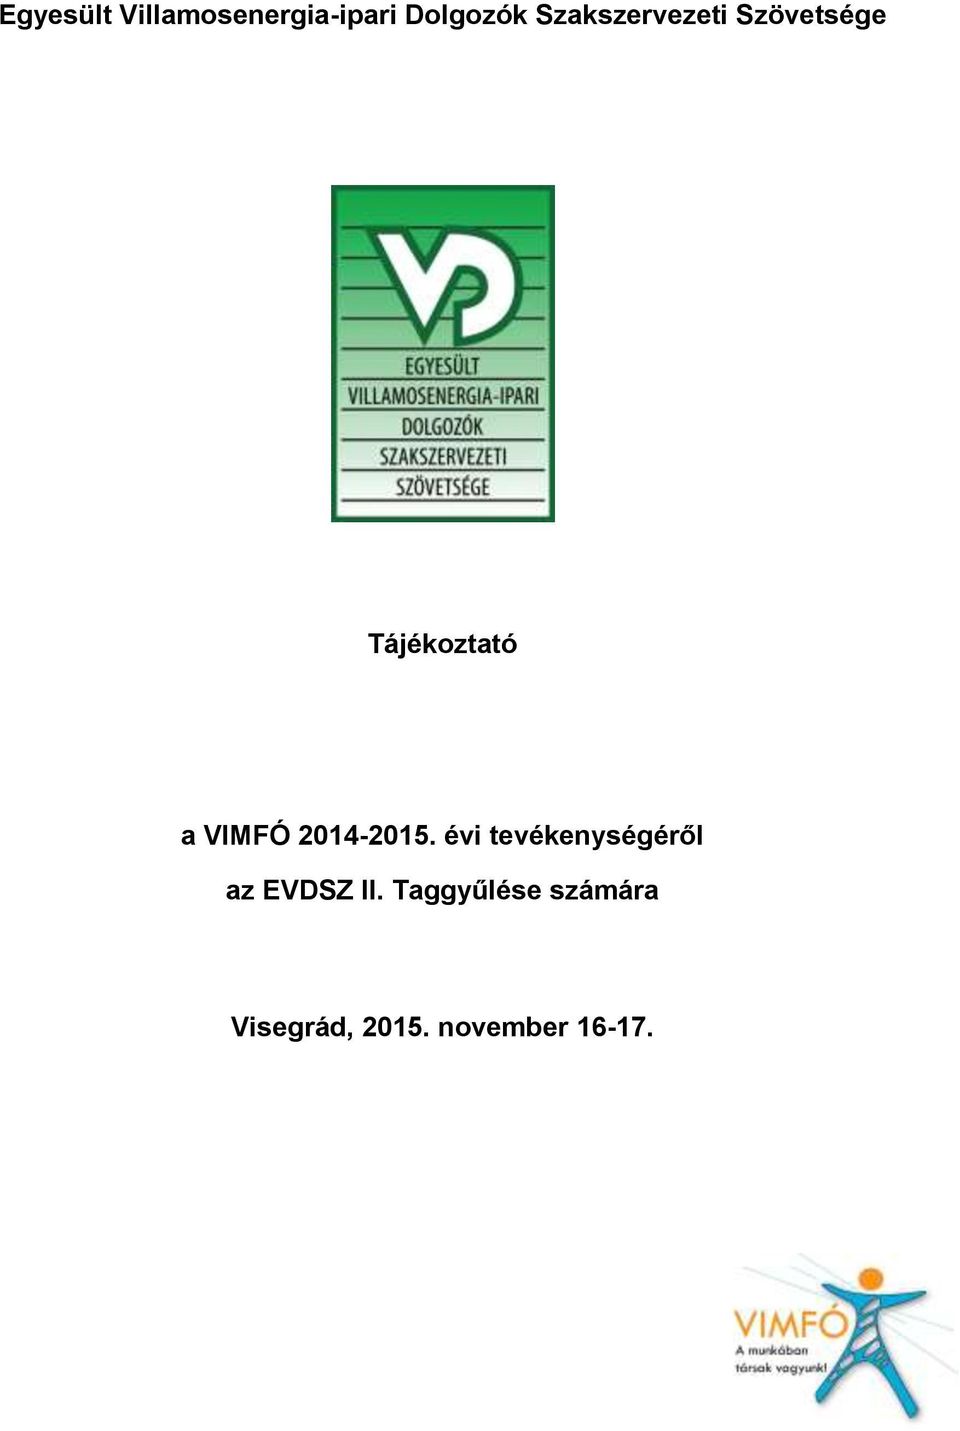 VIMFÓ 2014-2015.